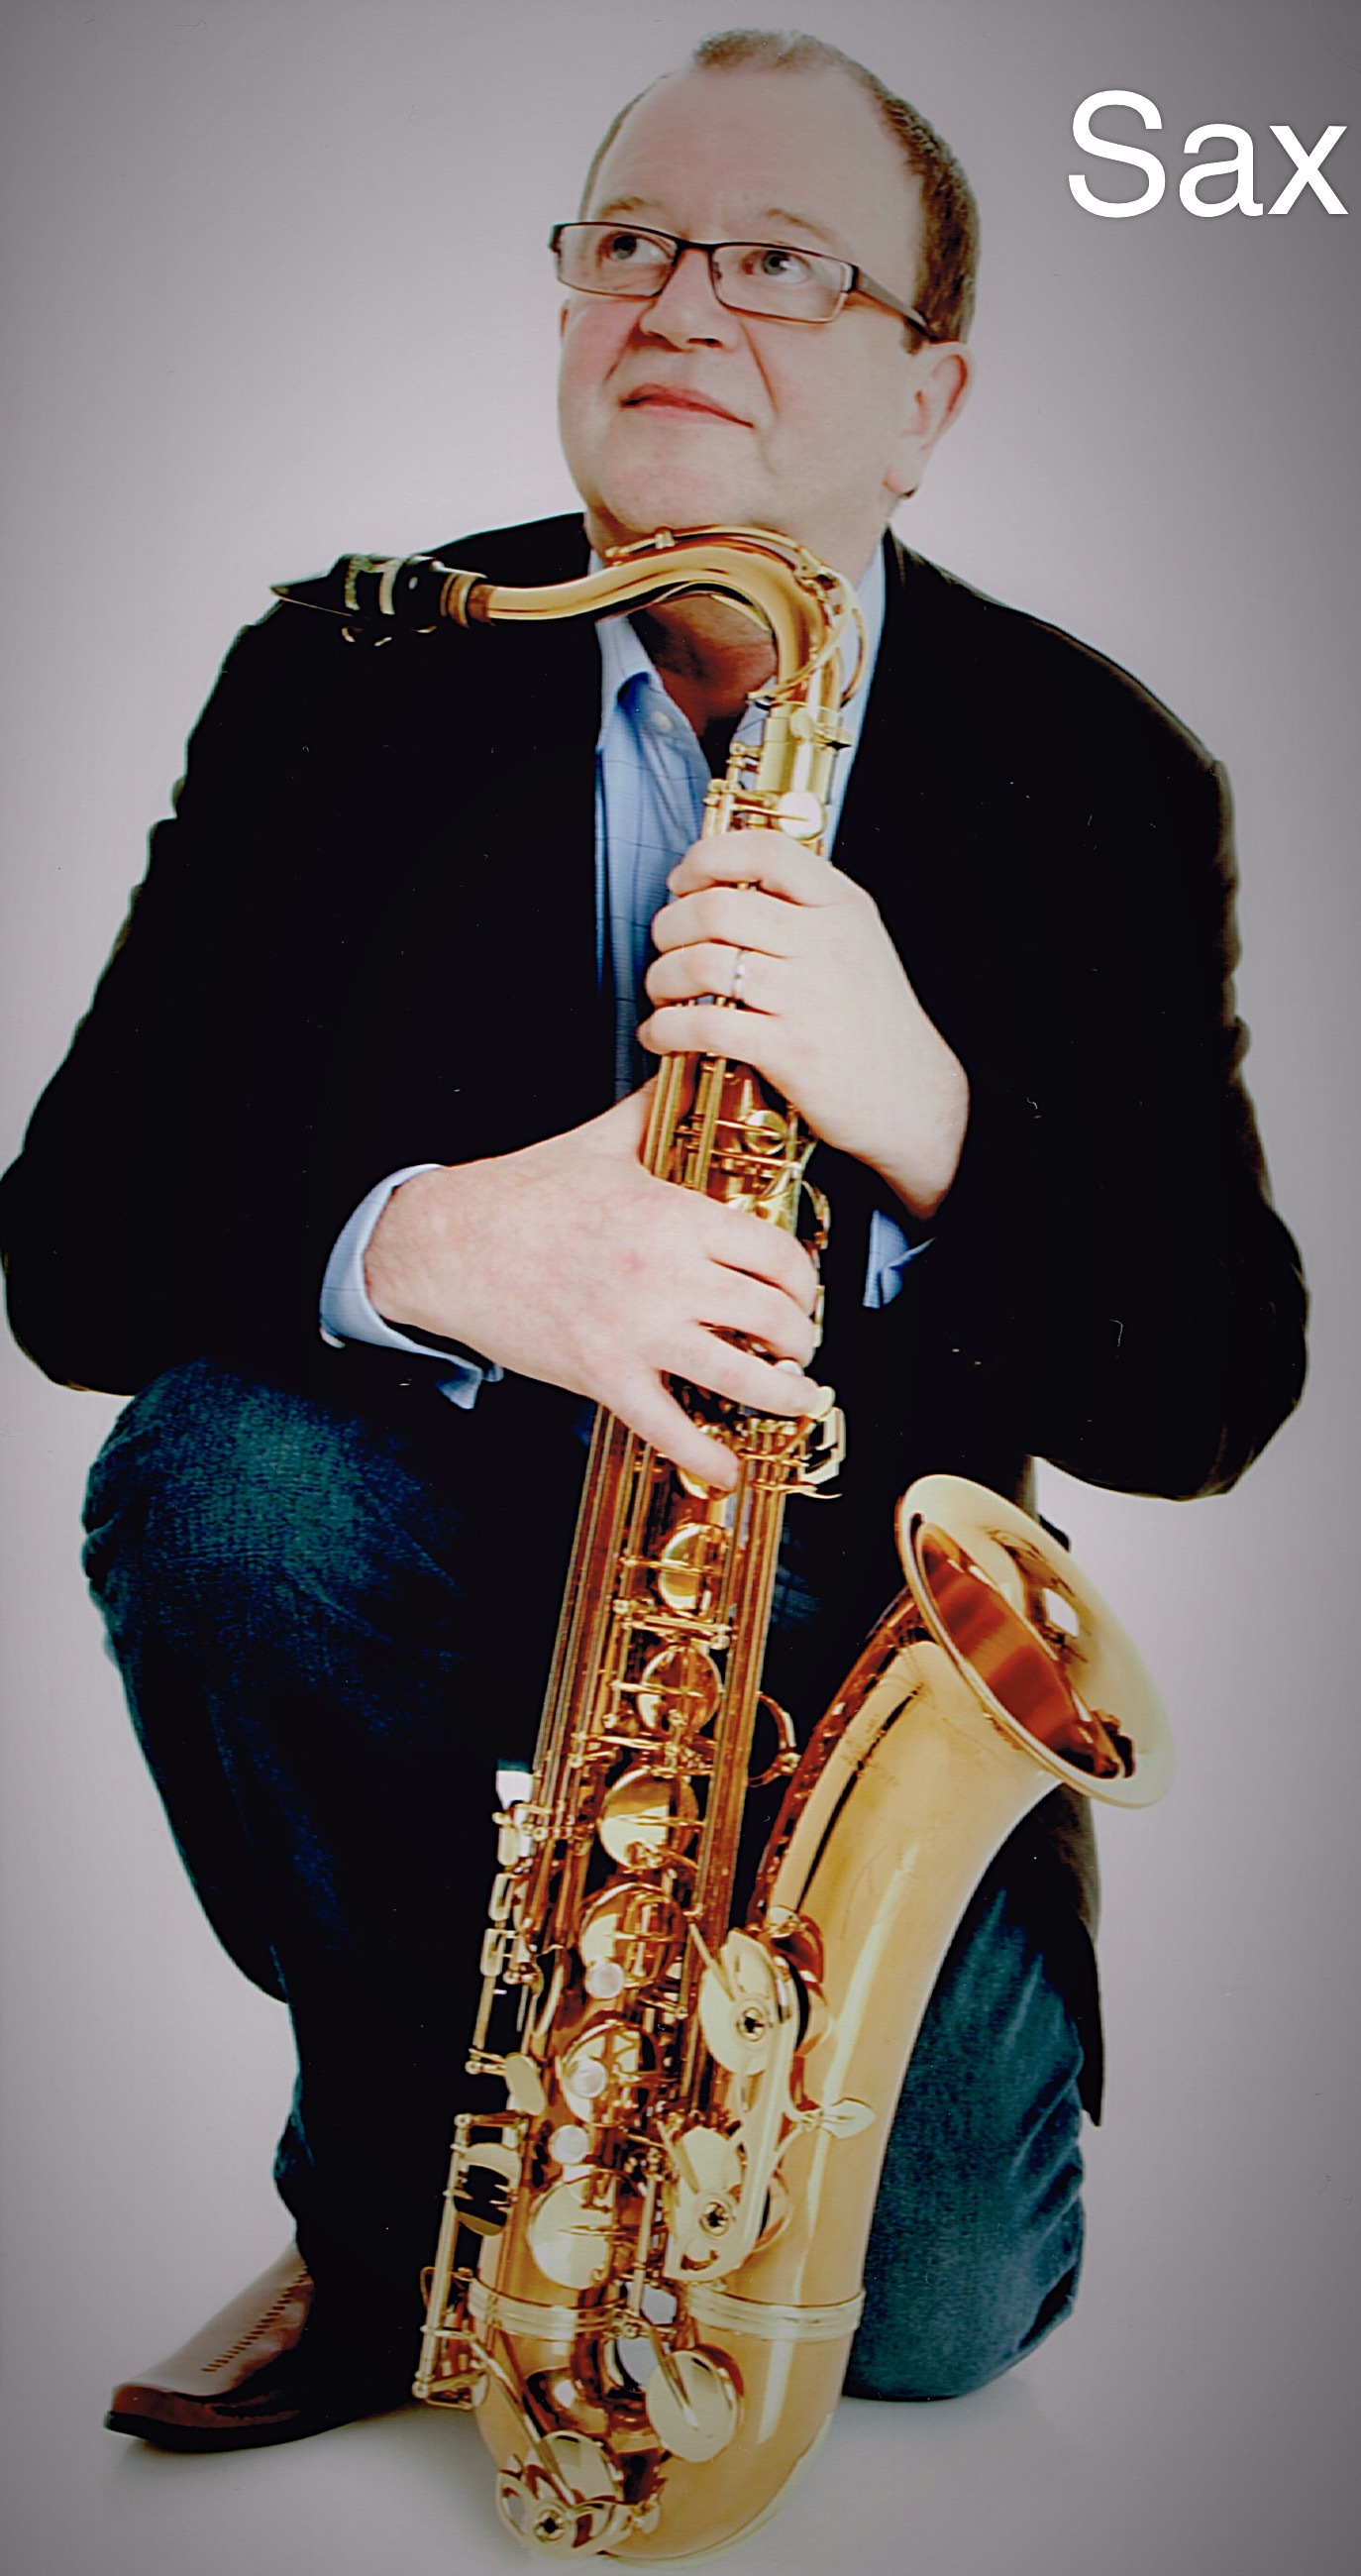 Saxophonist Ken in Blyth, Northumberland